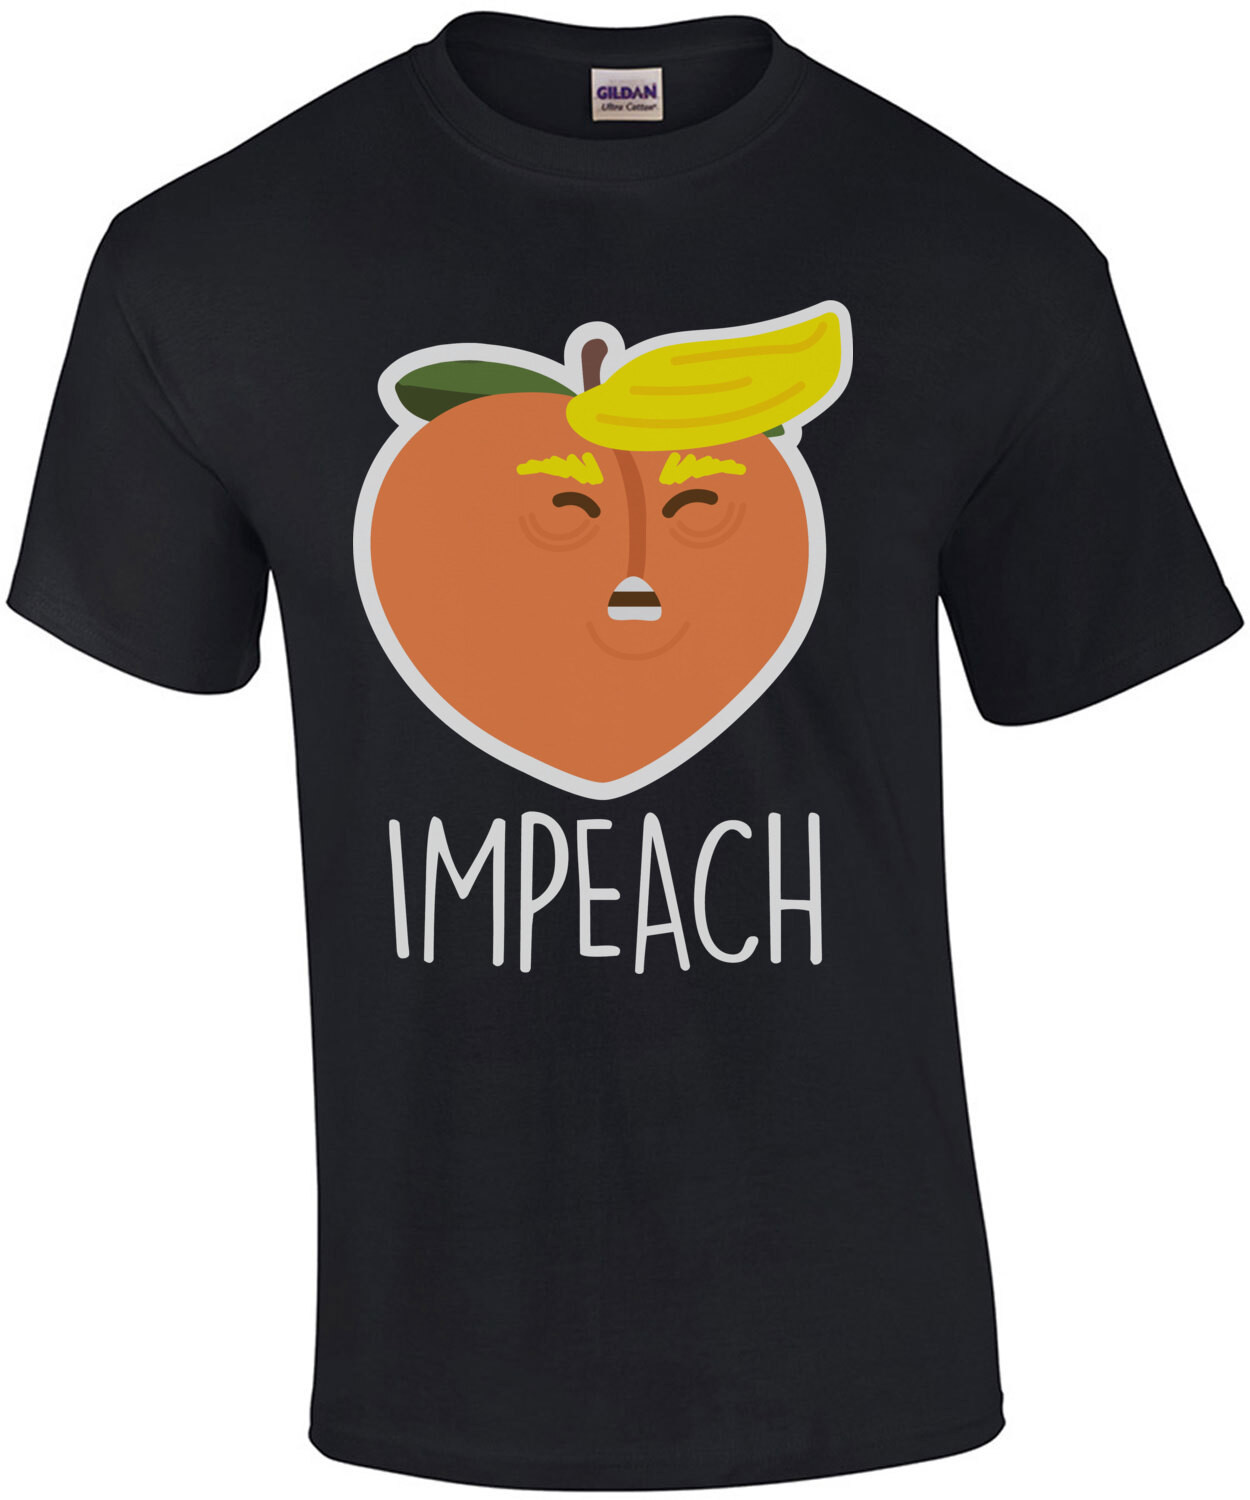 IMPEACH Donald Trump T-Shirt - Funny Pun Anti-trump t-shirt